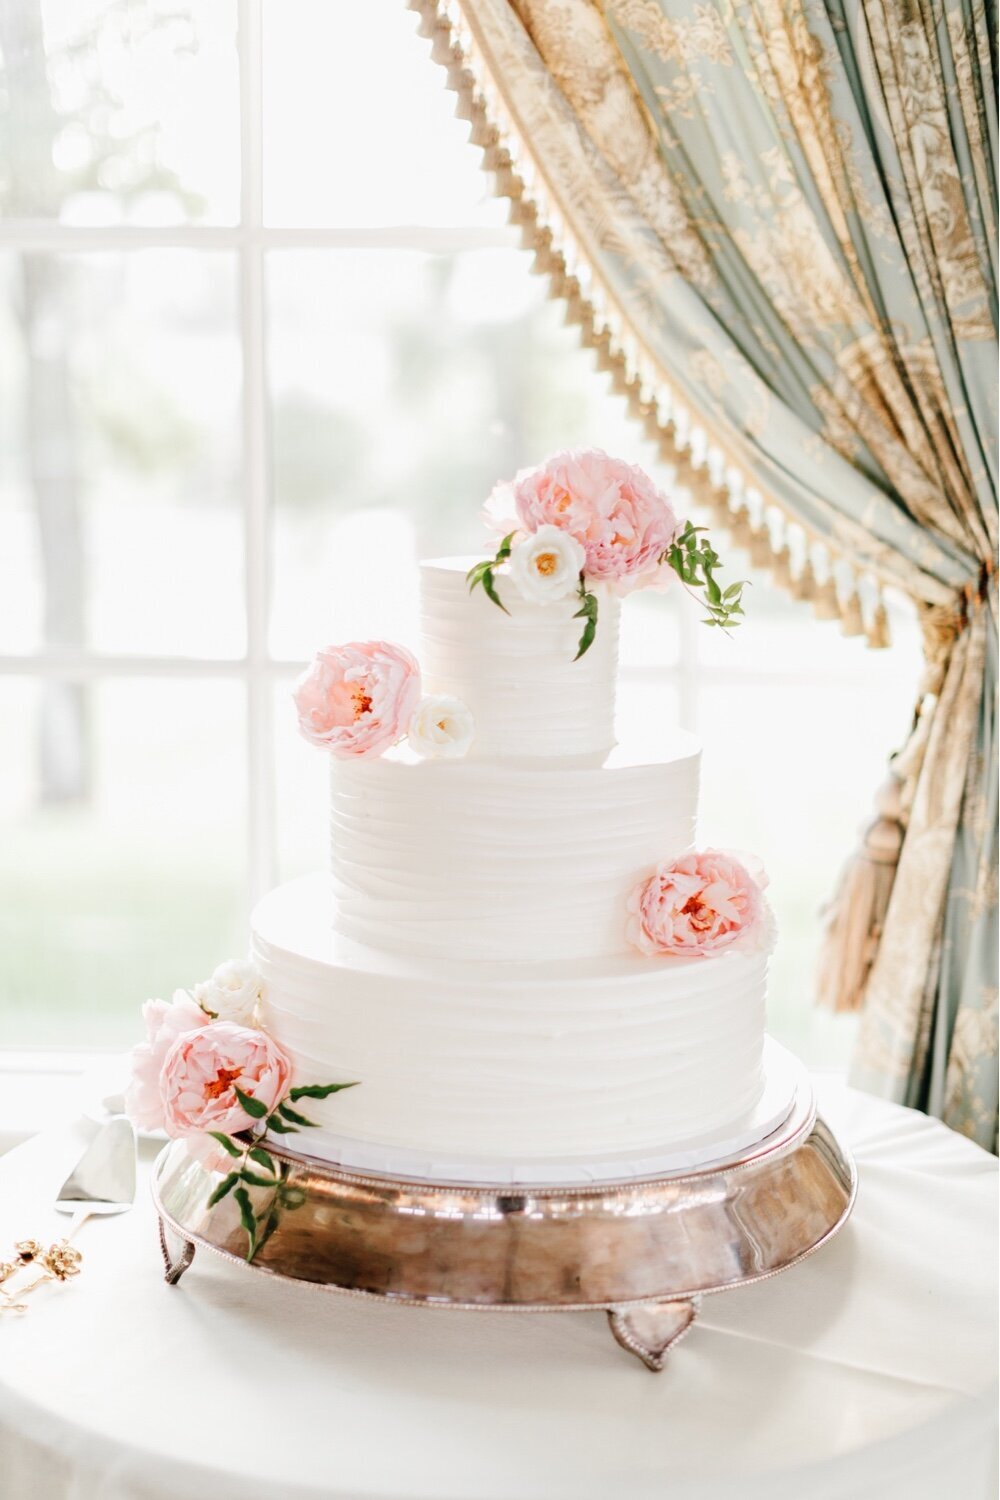 065_wedding-cake_all-white-wedding-cake